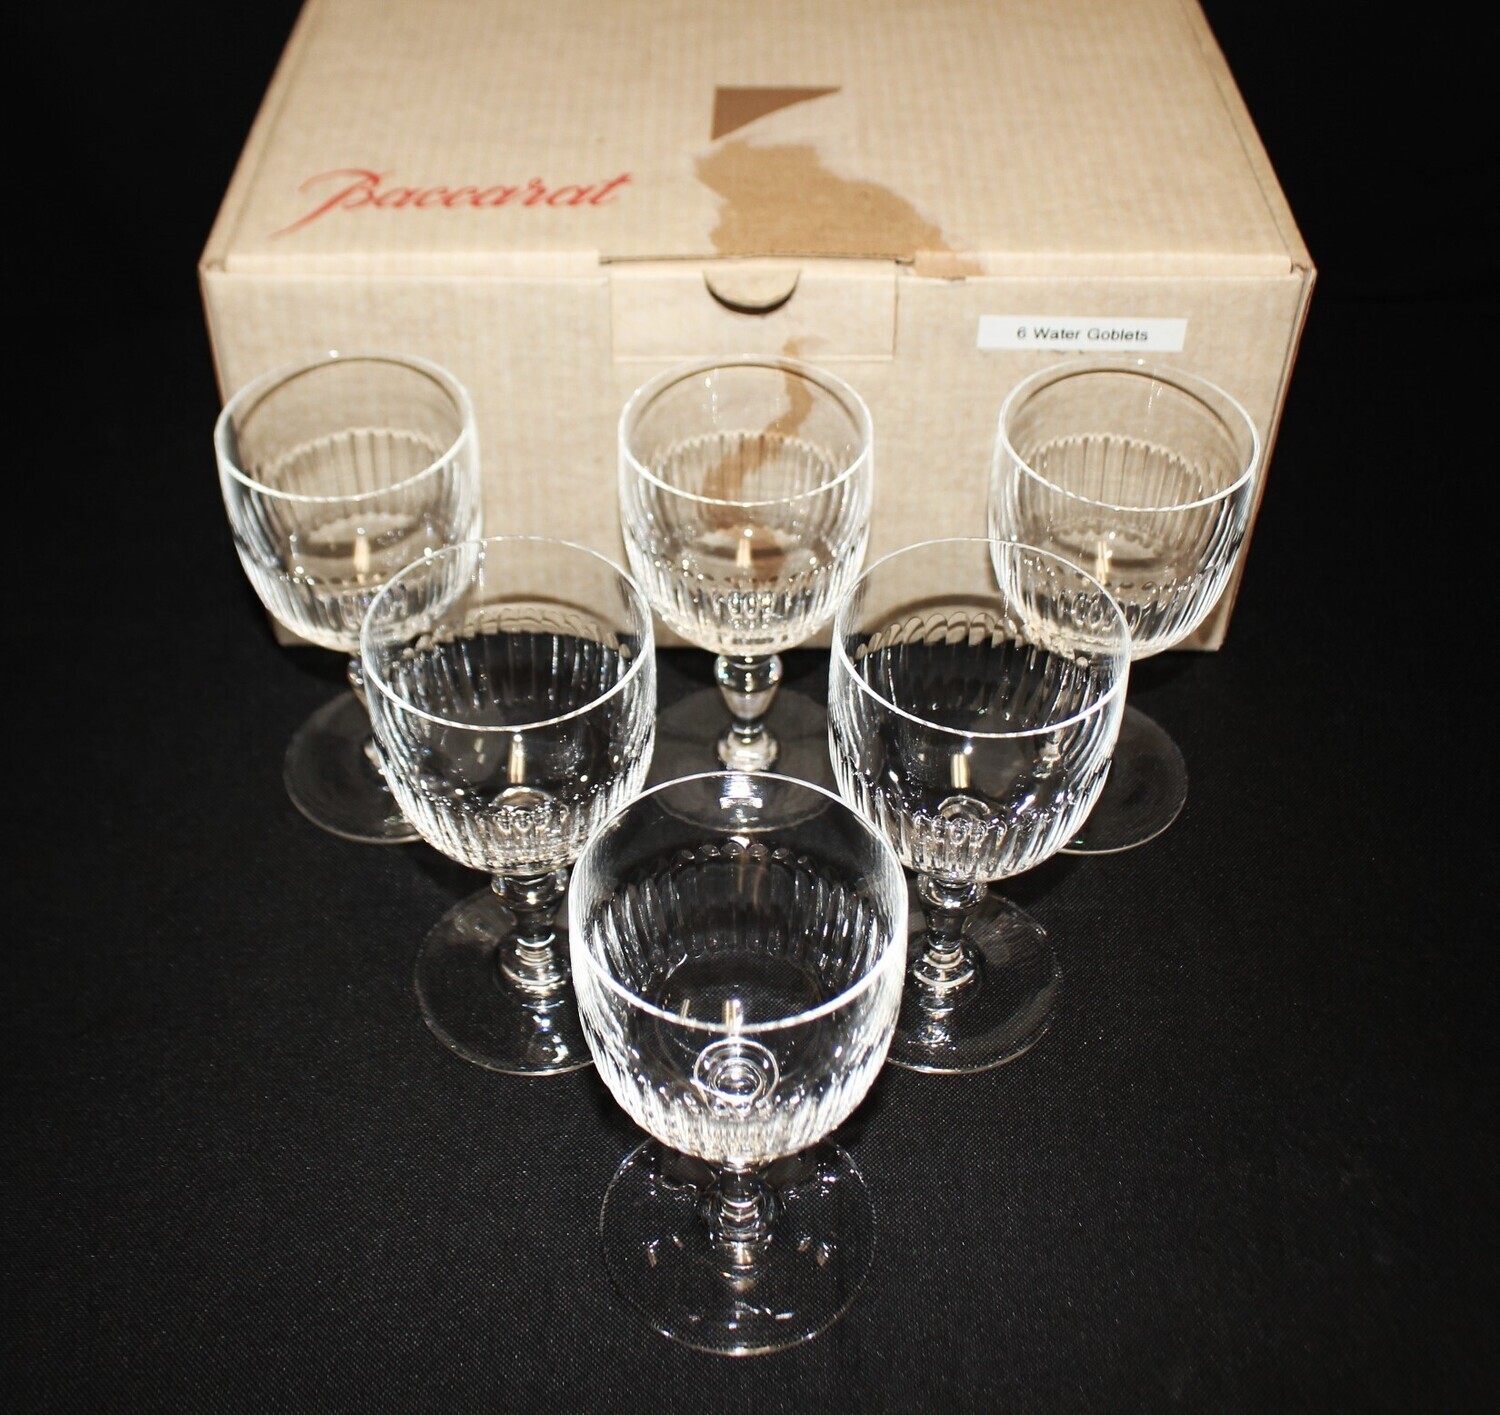 Set of 6 Baccarat RENAISSANCE Cut 5 7/8” Stemmed Water Goblets in Box, Signed